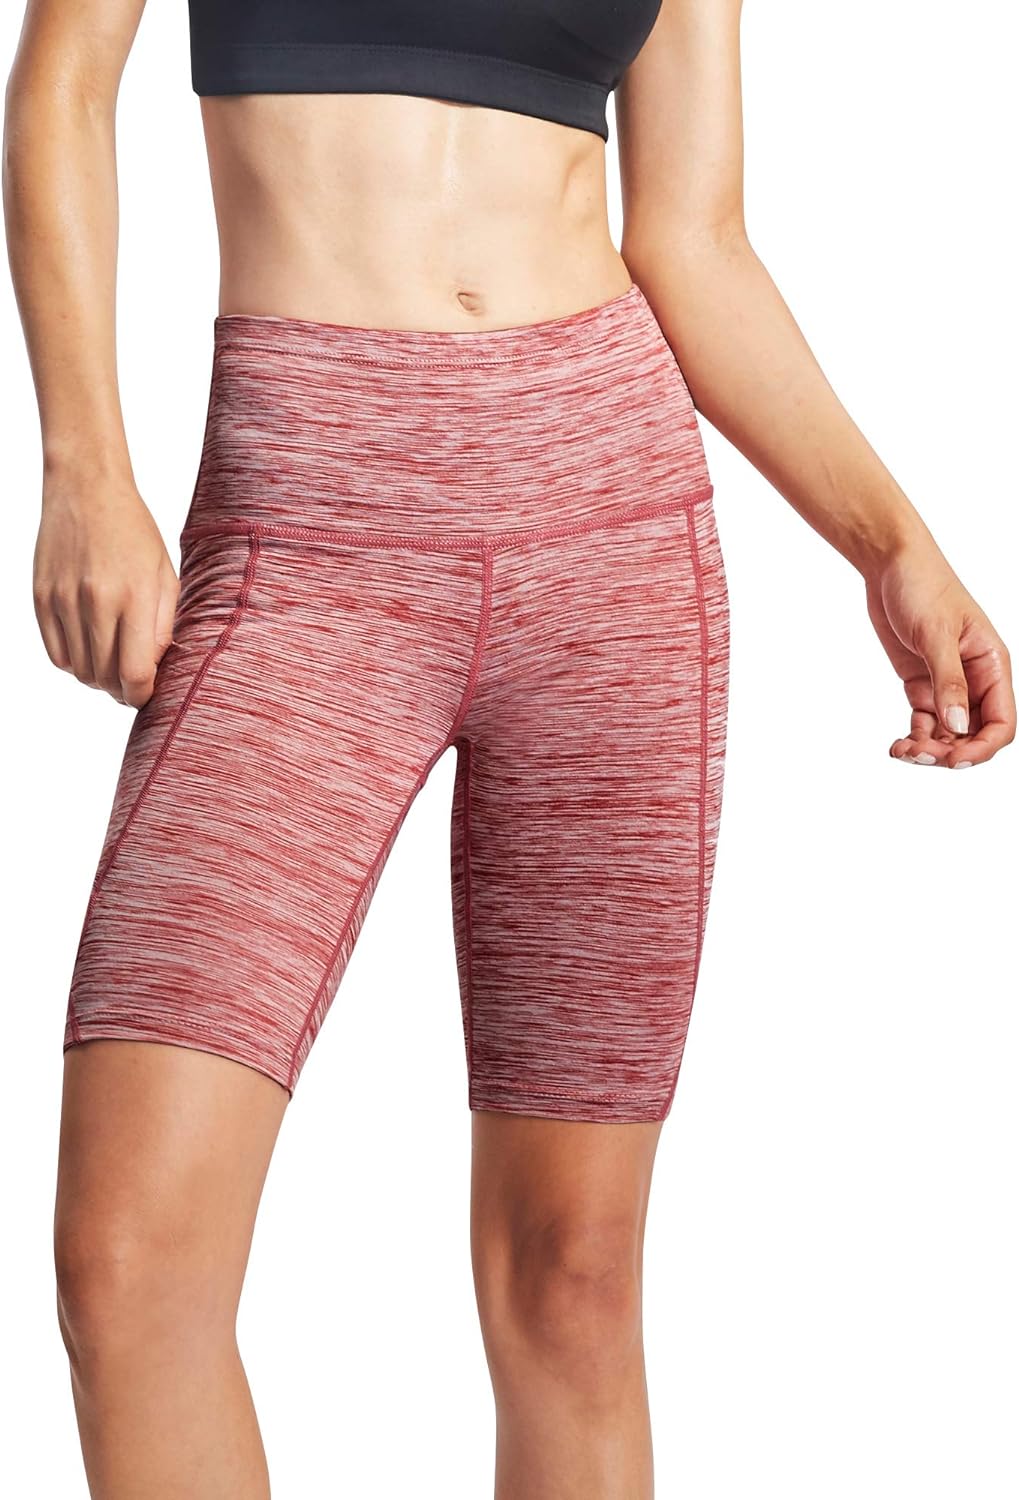 Neleus Womens Workout Compression Yoga Shorts with Pocket